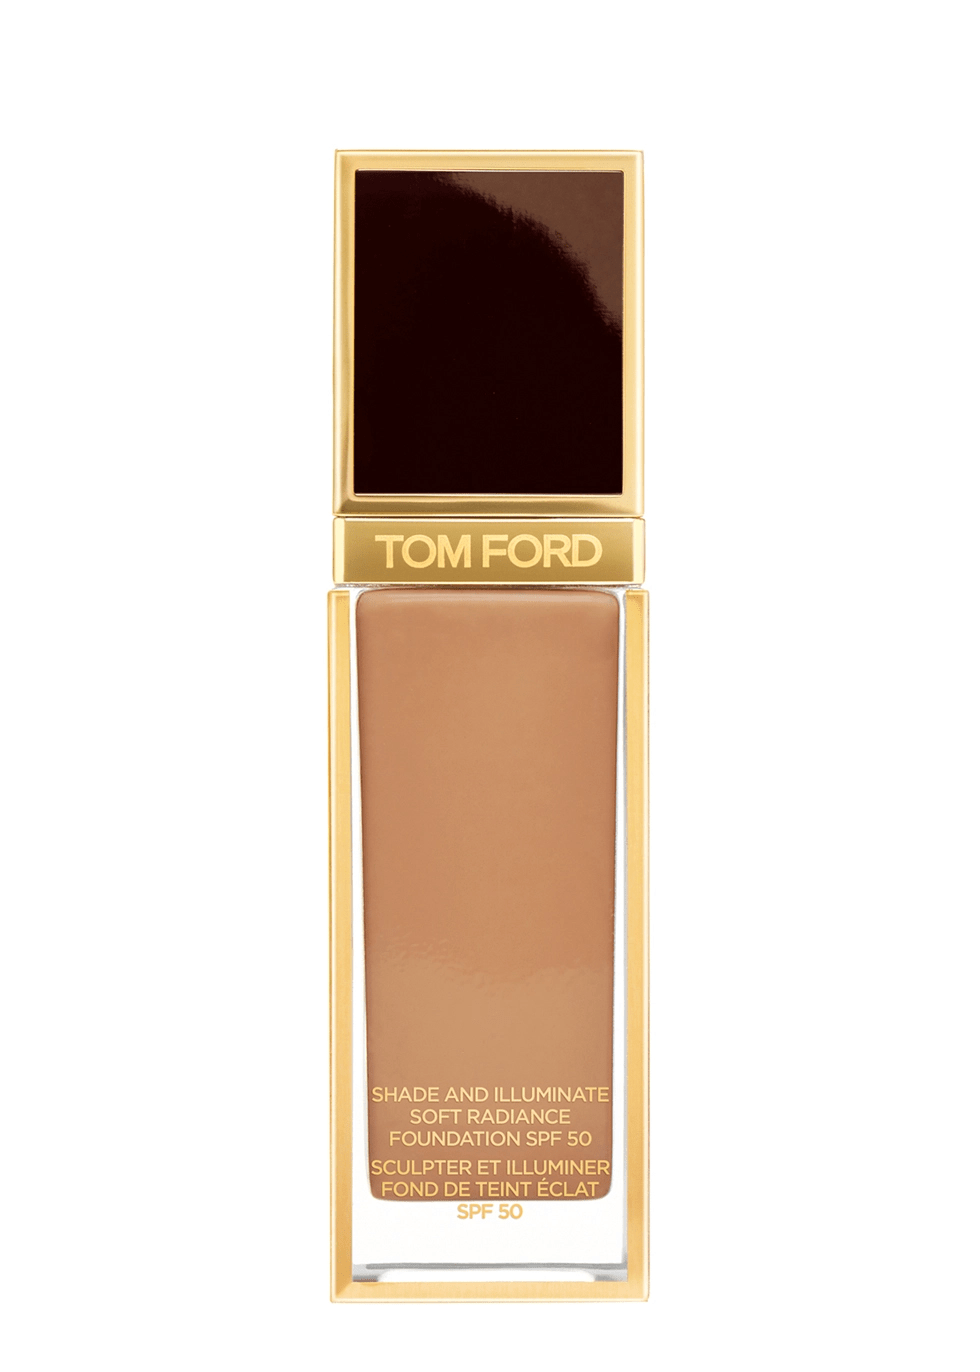 Tom Ford Shade and Illuminate Soft Radiance Foundation SPF 50 - 9.5 Warm Almond, foundation, London Loves Beauty